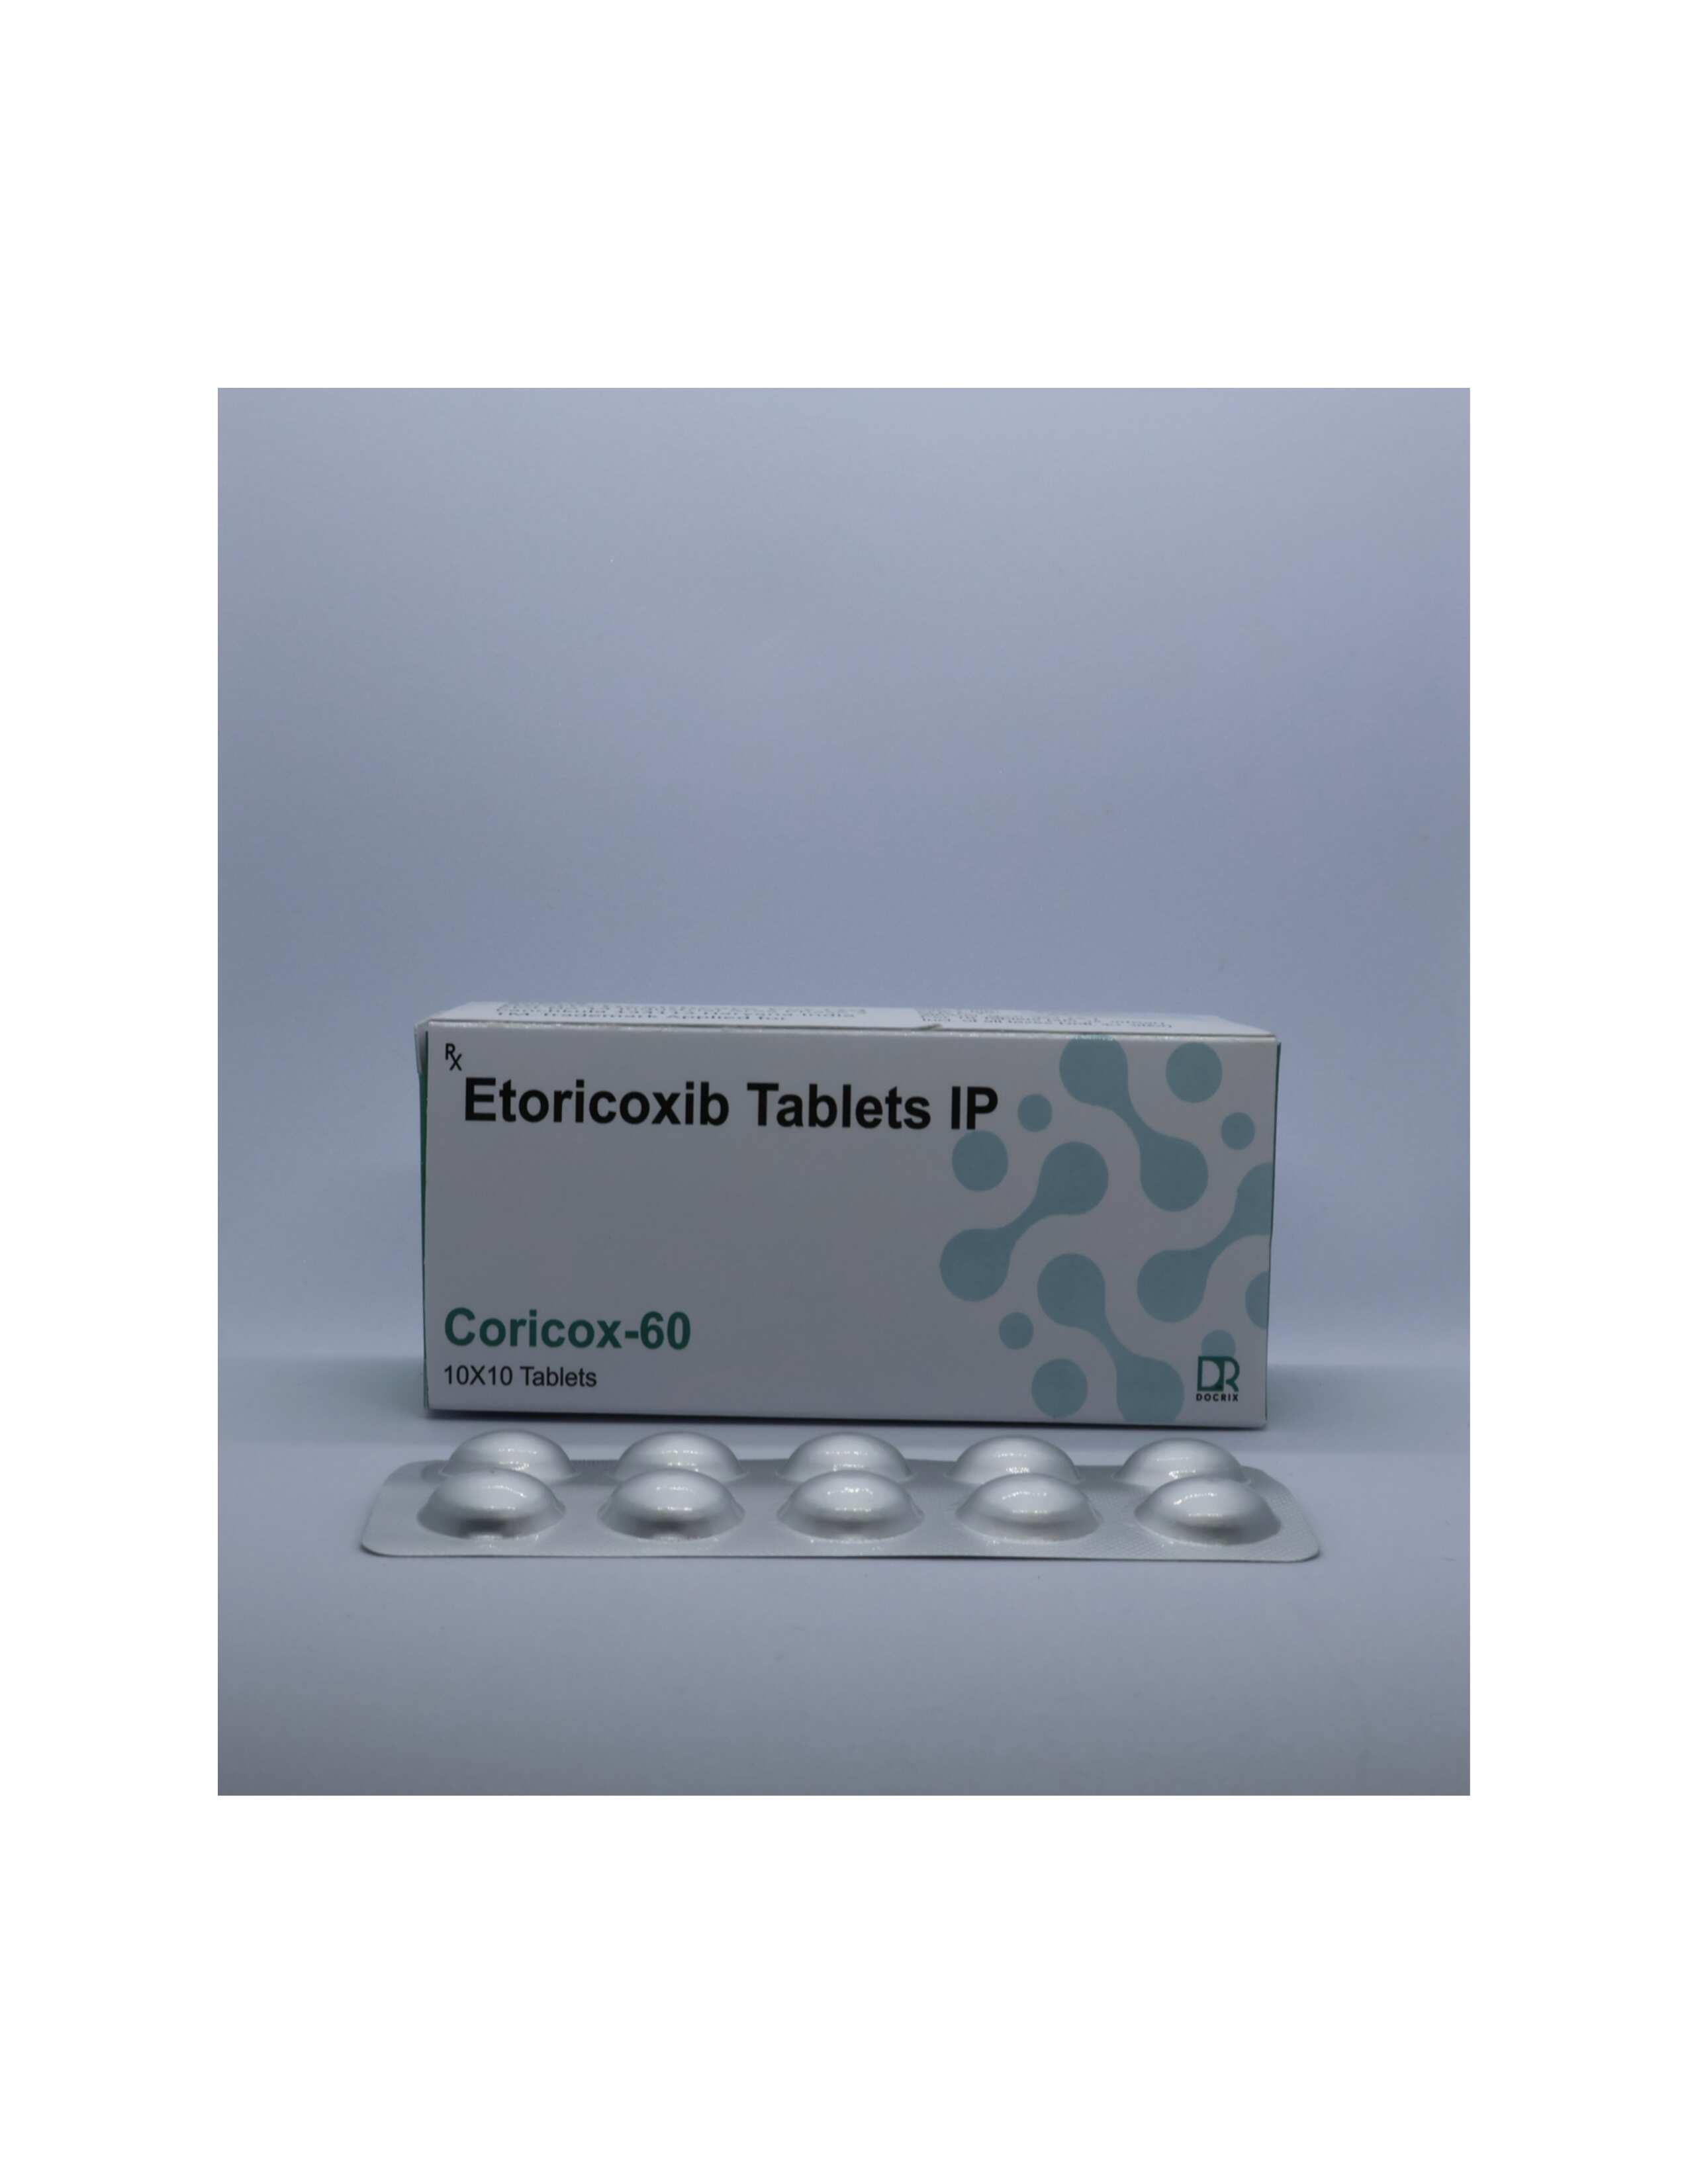 Product Name: Coricox 60, Compositions of Coricox 60 are Etoricoxib Tablets IP - Docrix Healthcare